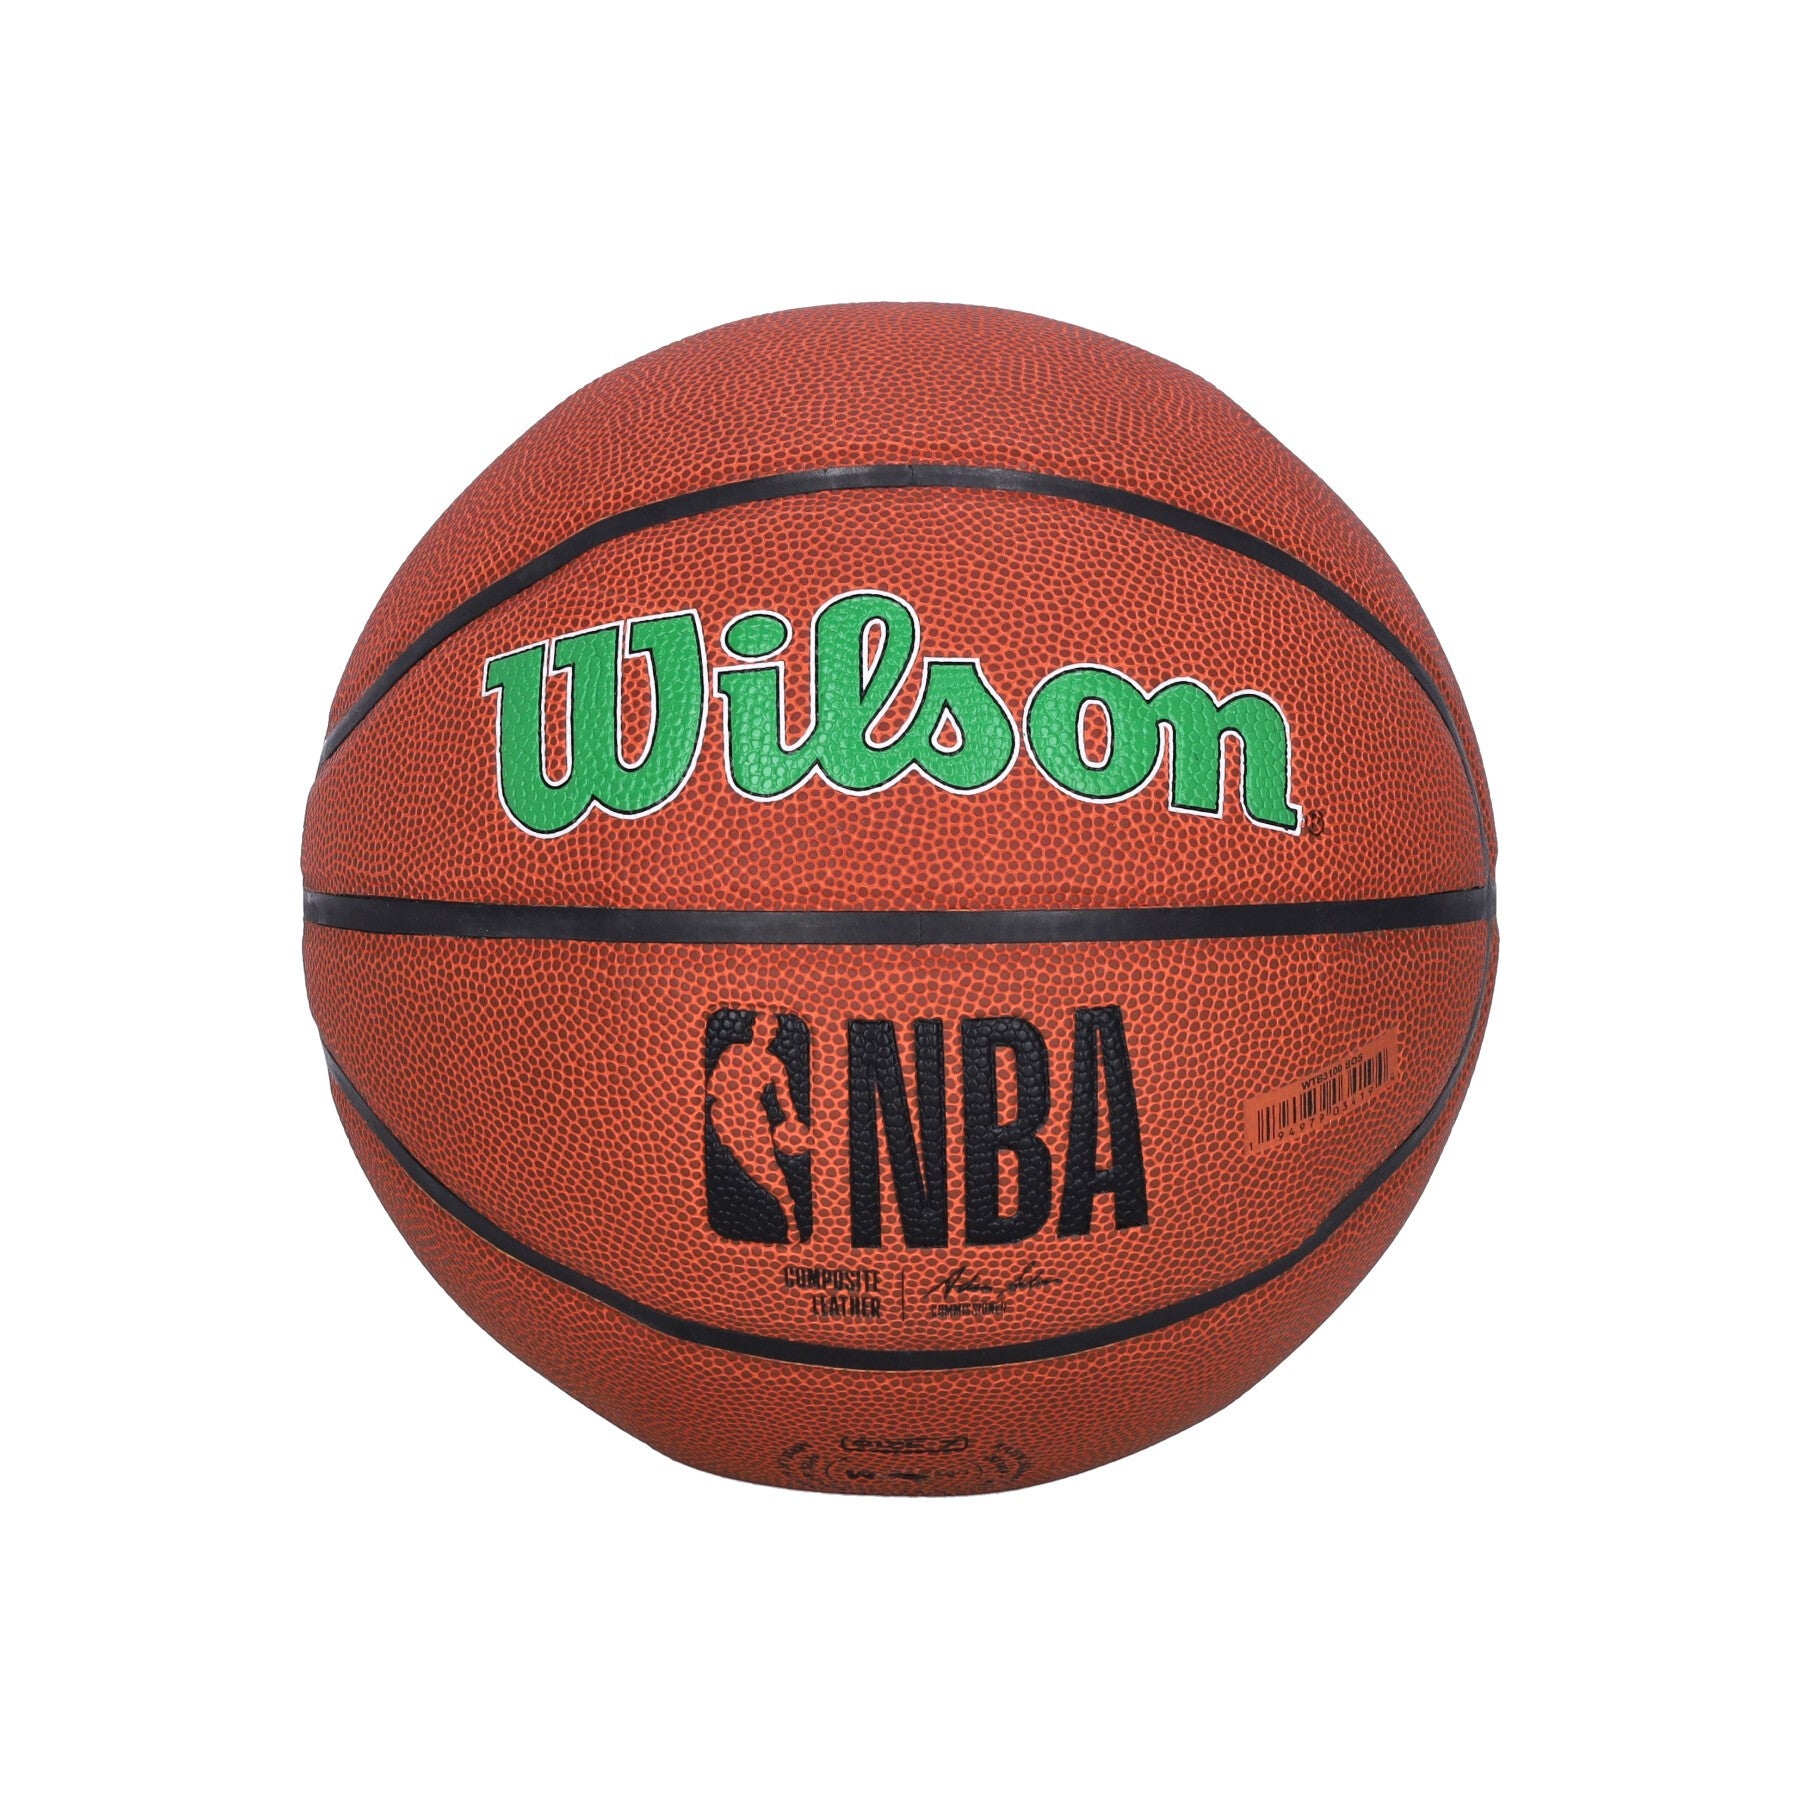 Pallone Uomo Nba Team Alliance Basketball Size 7 Boscel Brown/original Team Colors